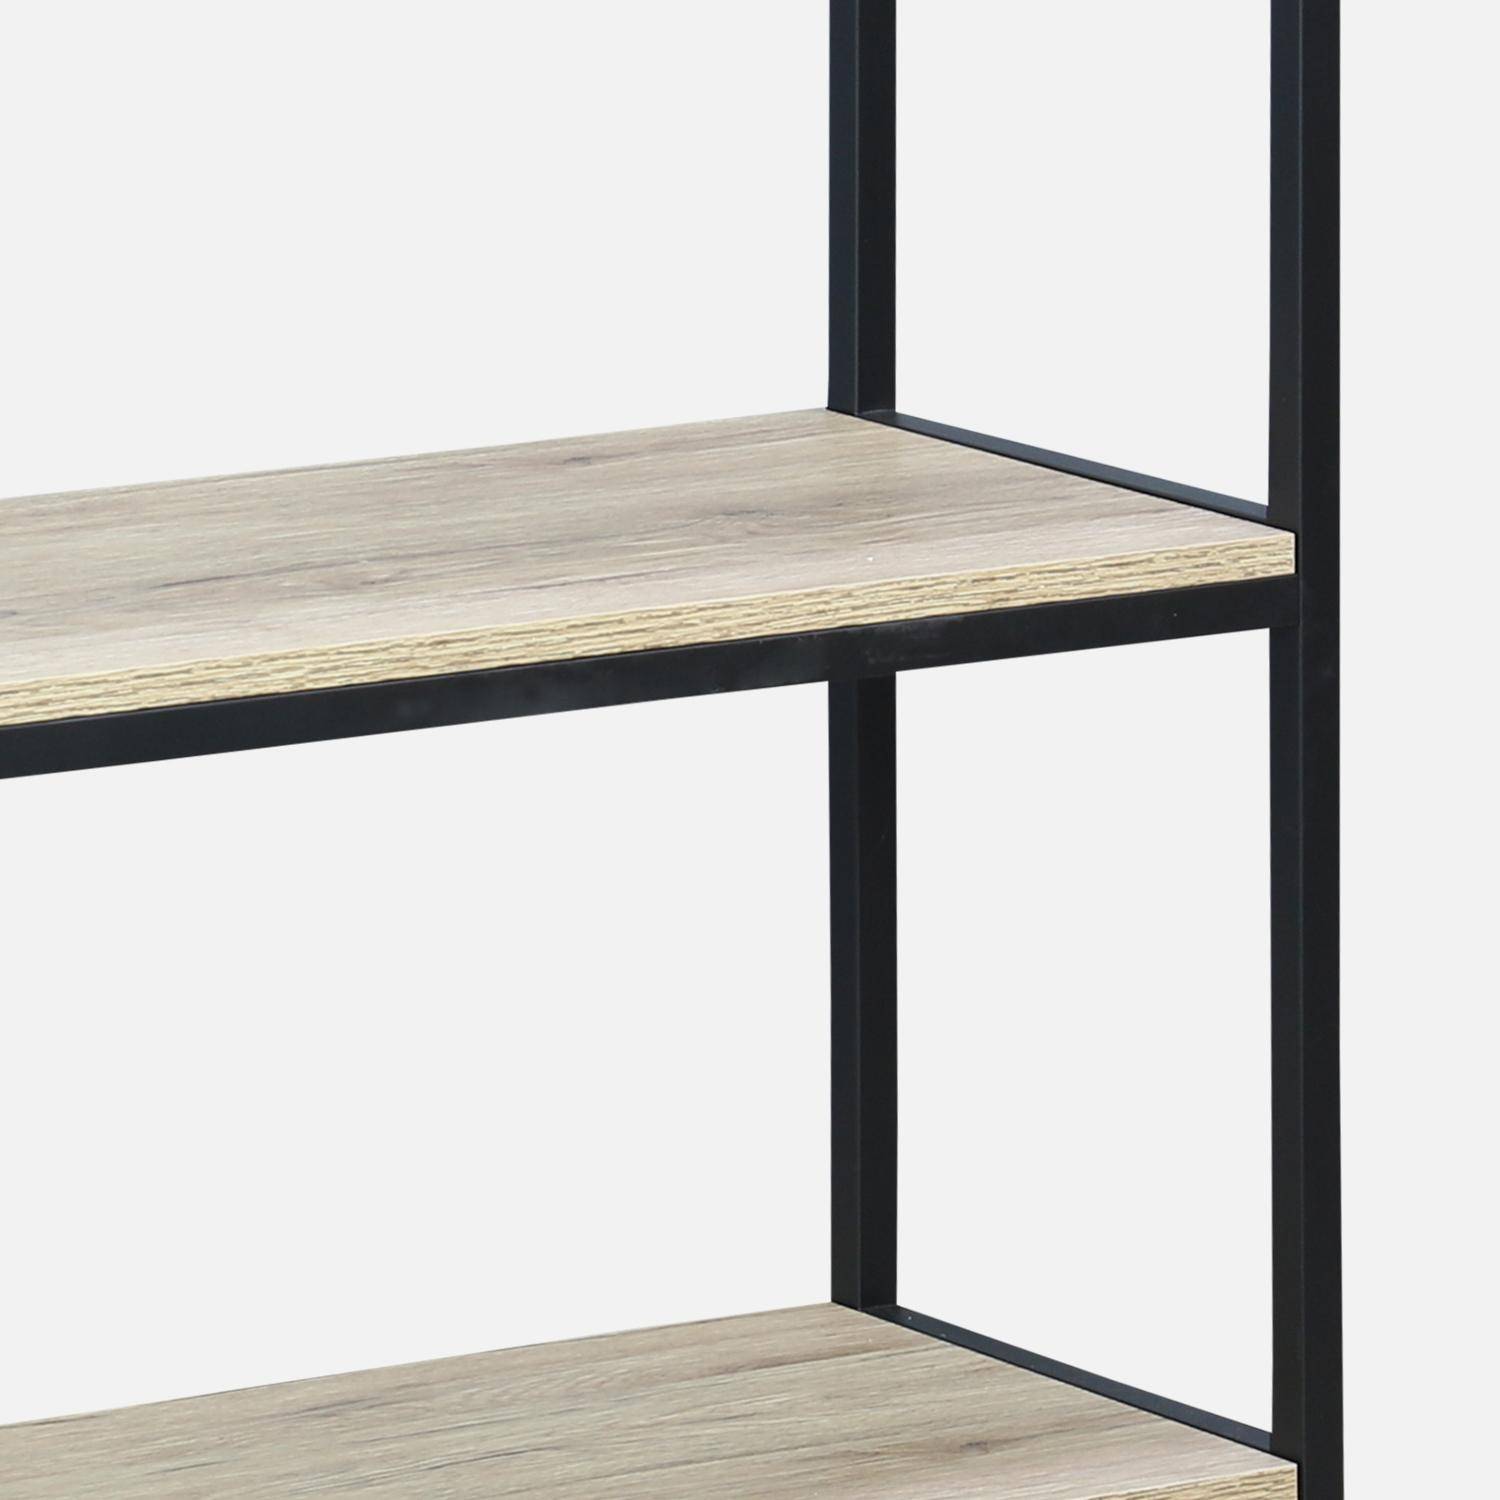 Low 3 shelf metal and wood effect bookcase, 120x30x80cm  - Loft - Black,sweeek,Photo6